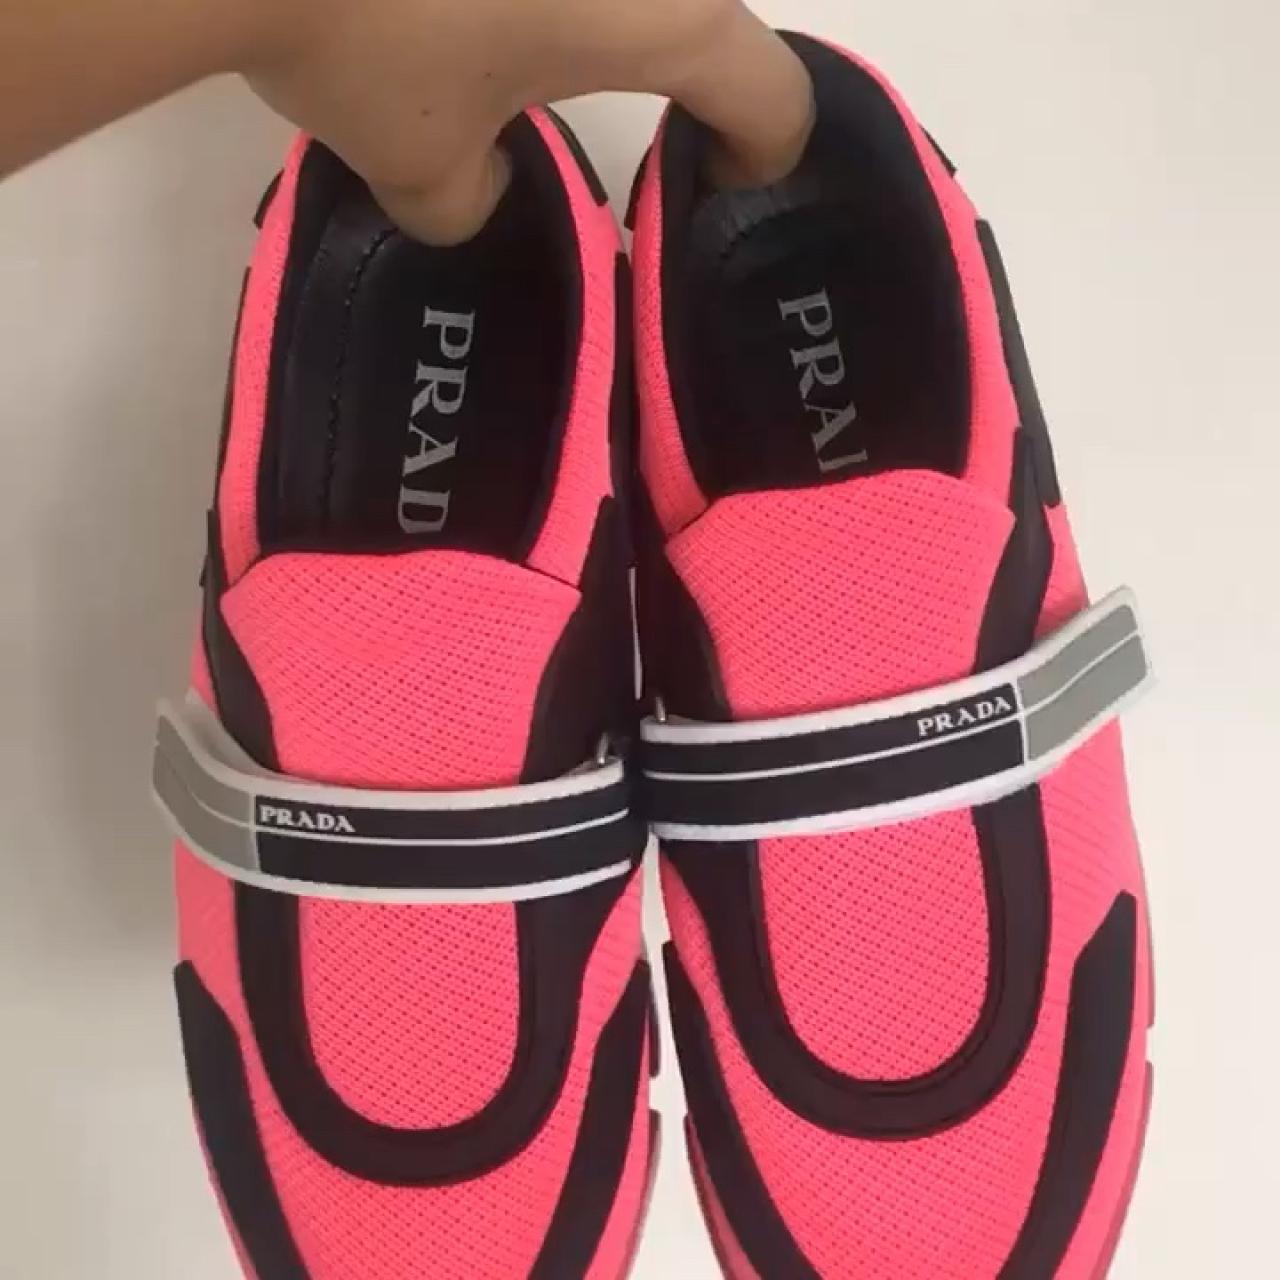 Super Sick Hot Pink Prada Cloudbust Sneakers I Love Depop